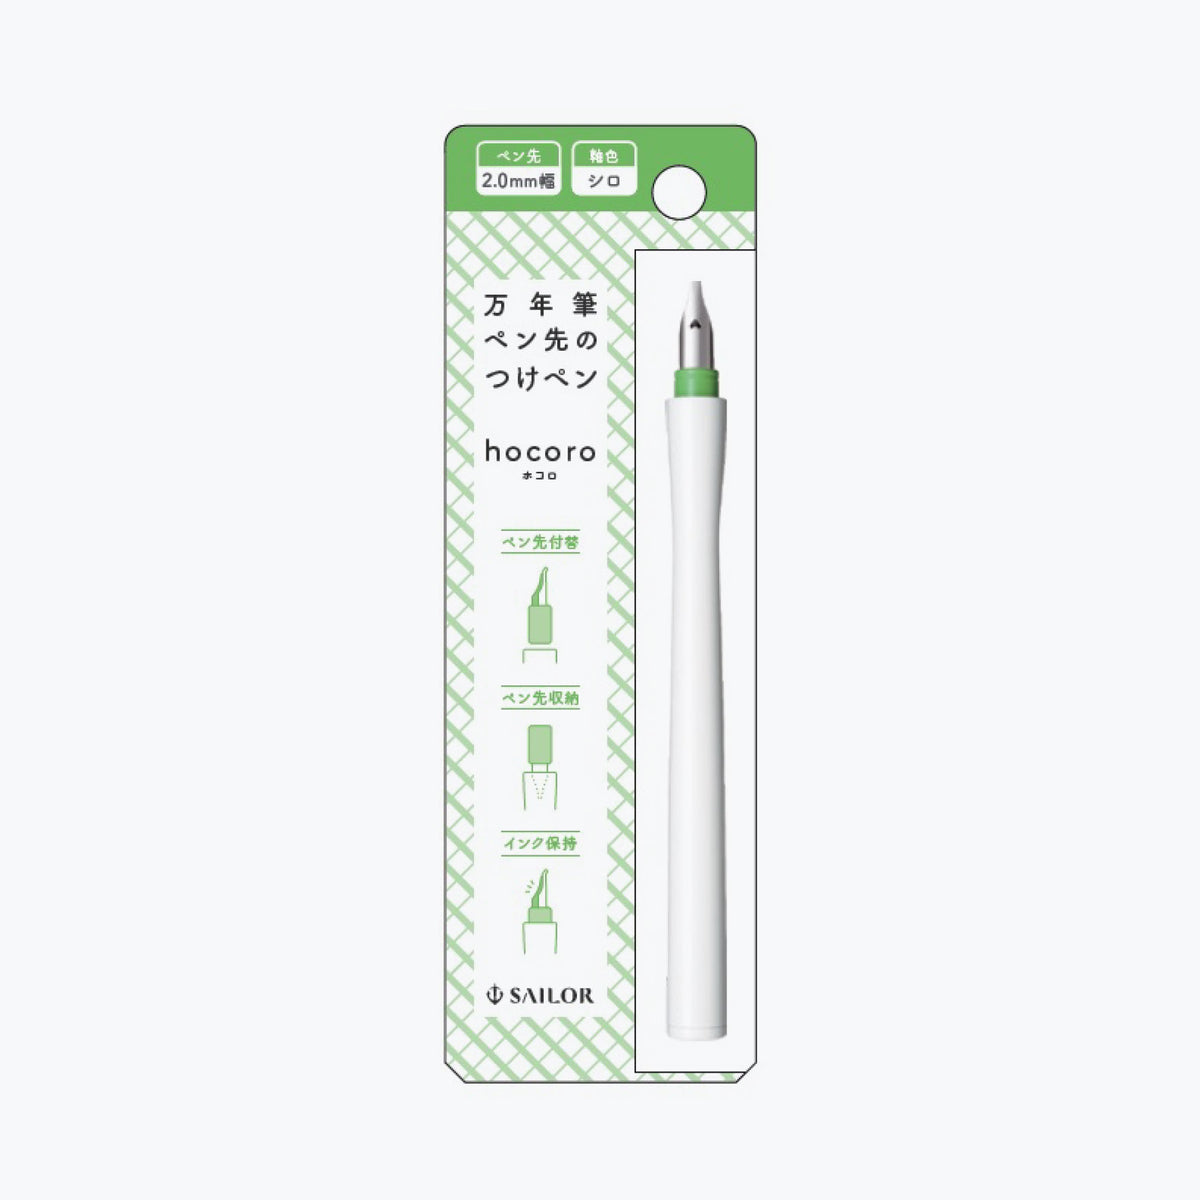 Sailor - Dip Pen - Hocoro - White - 2.0mm Stub Nib